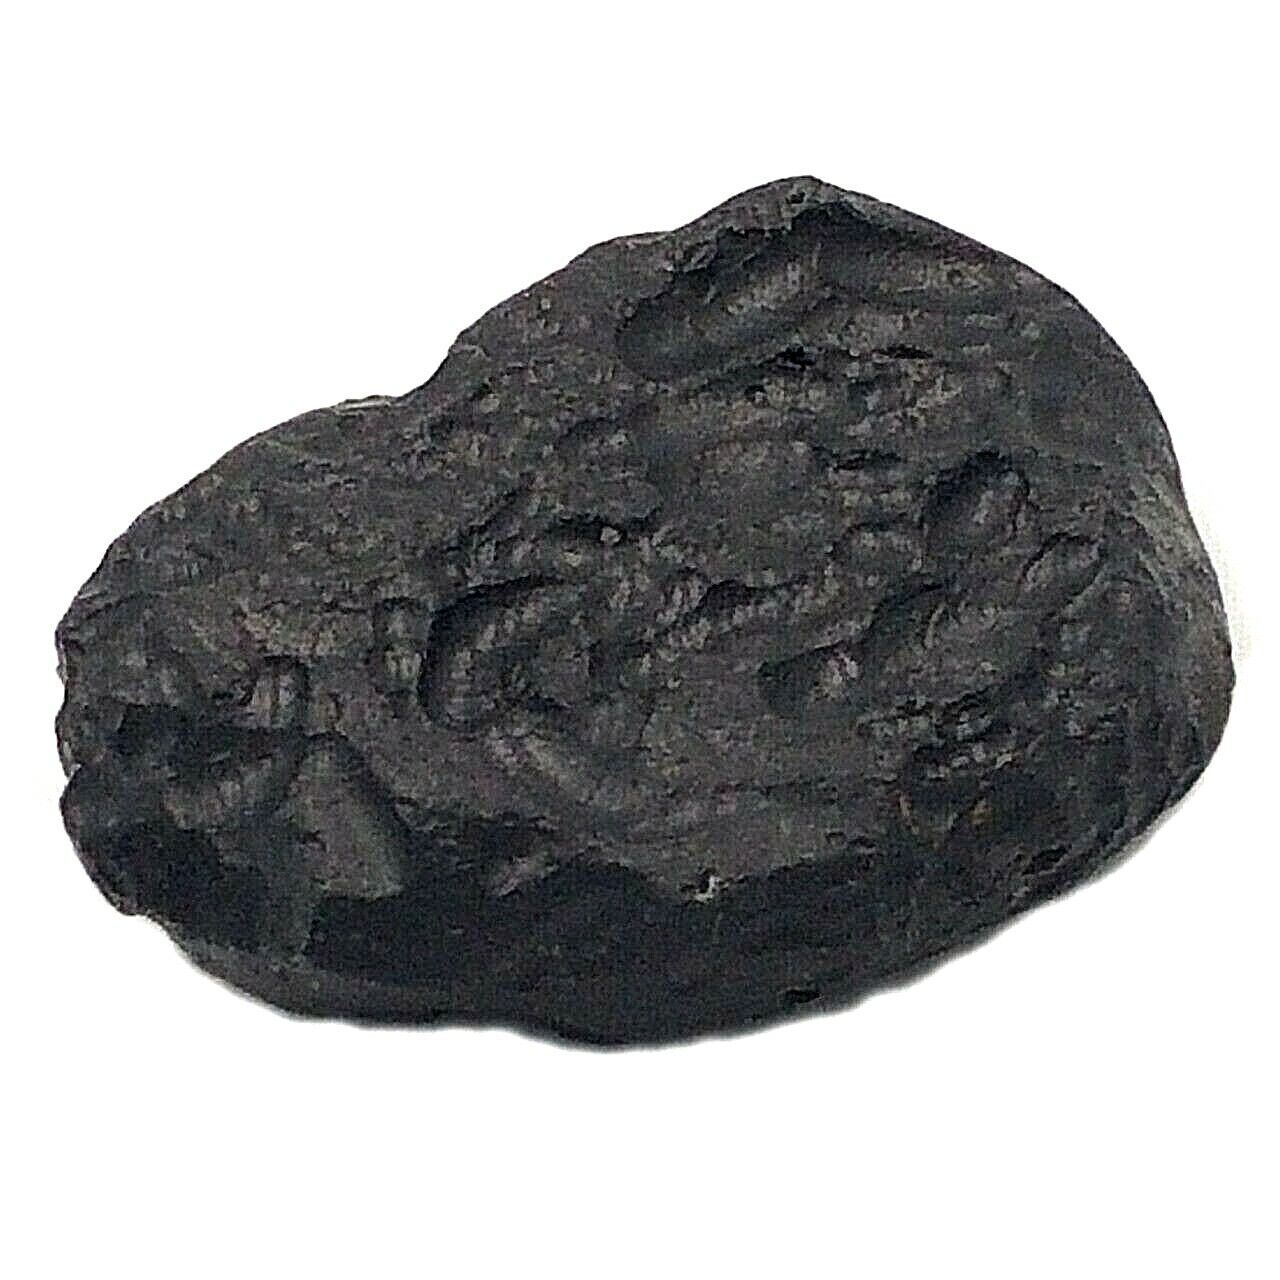 Black tektite meteorite space rock perfect Rods stone charm original rough 